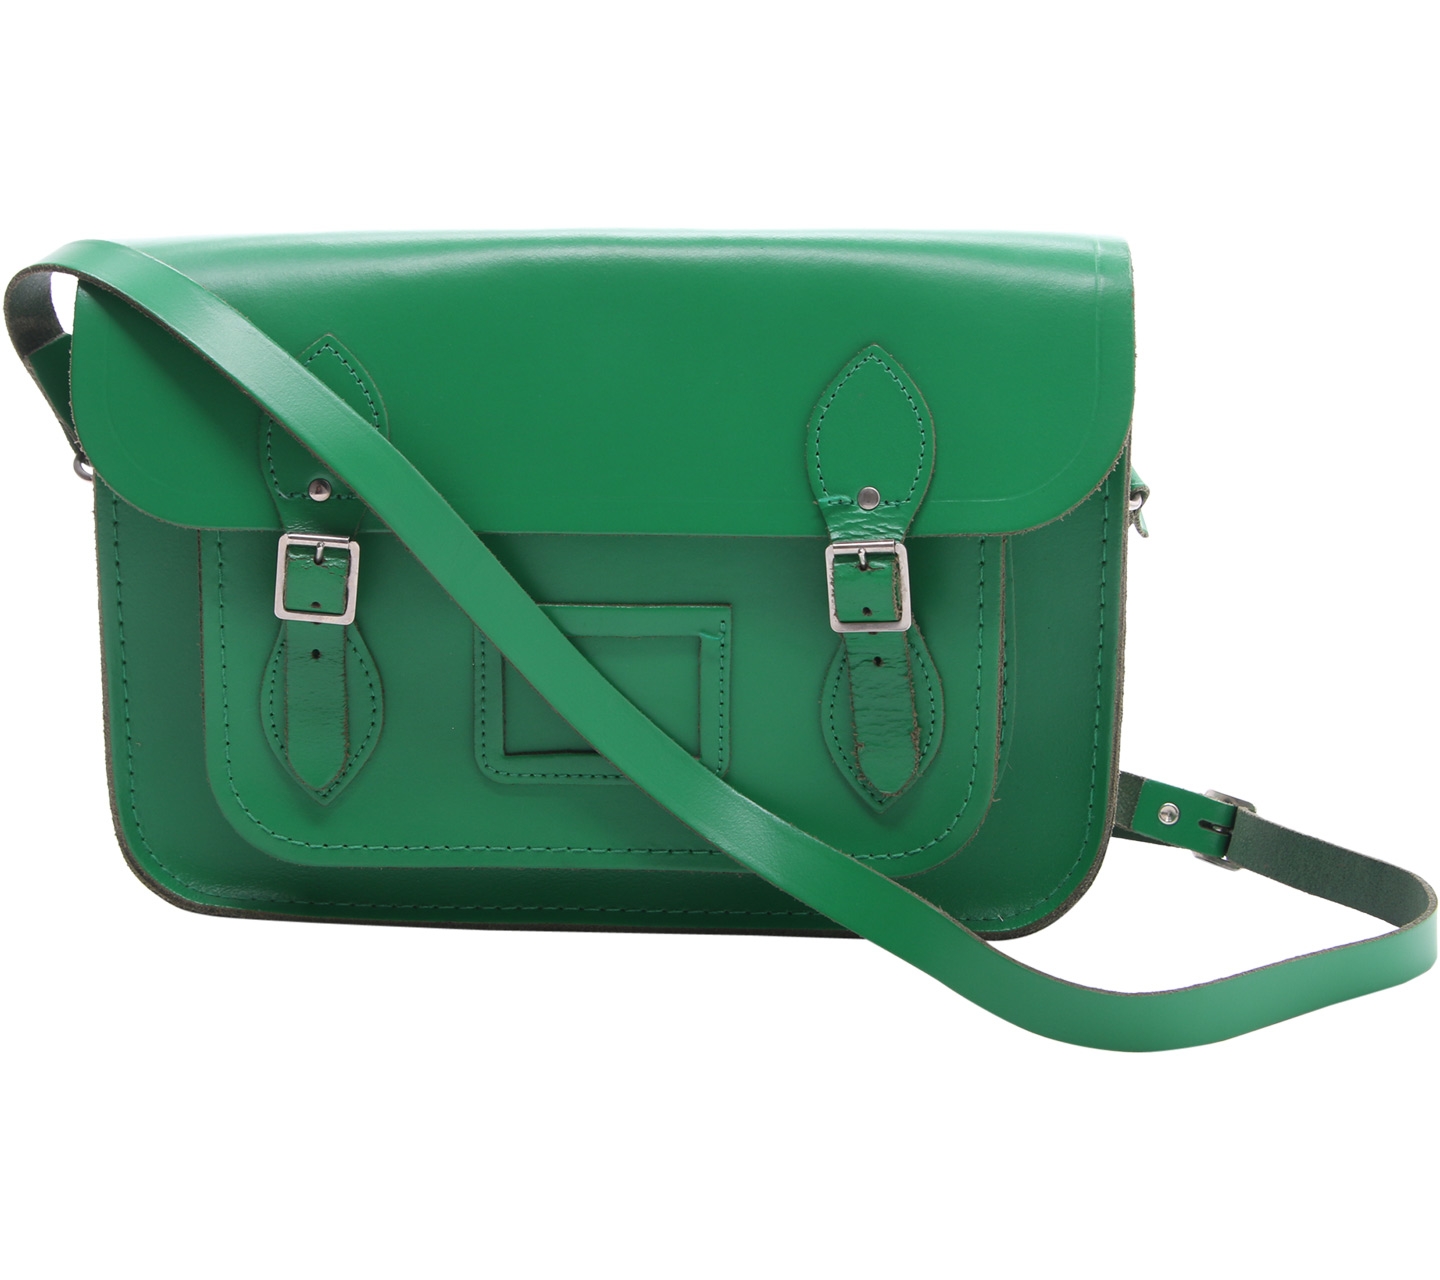 The Cambridge Satchel Company Green Sling Bag